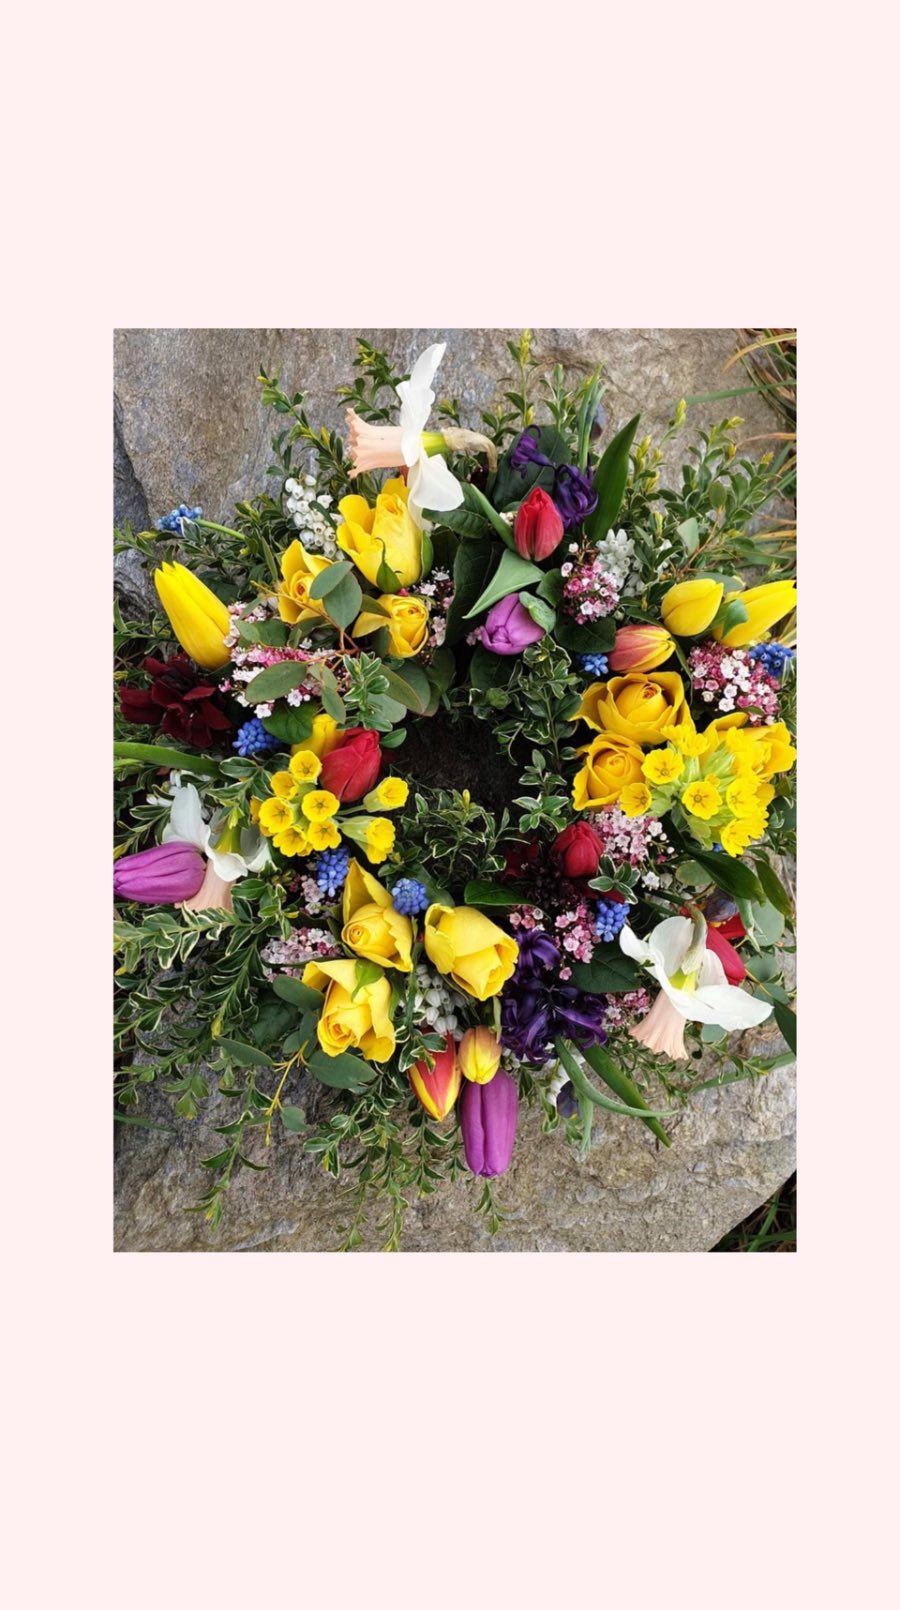 Standard Funeral Wreath